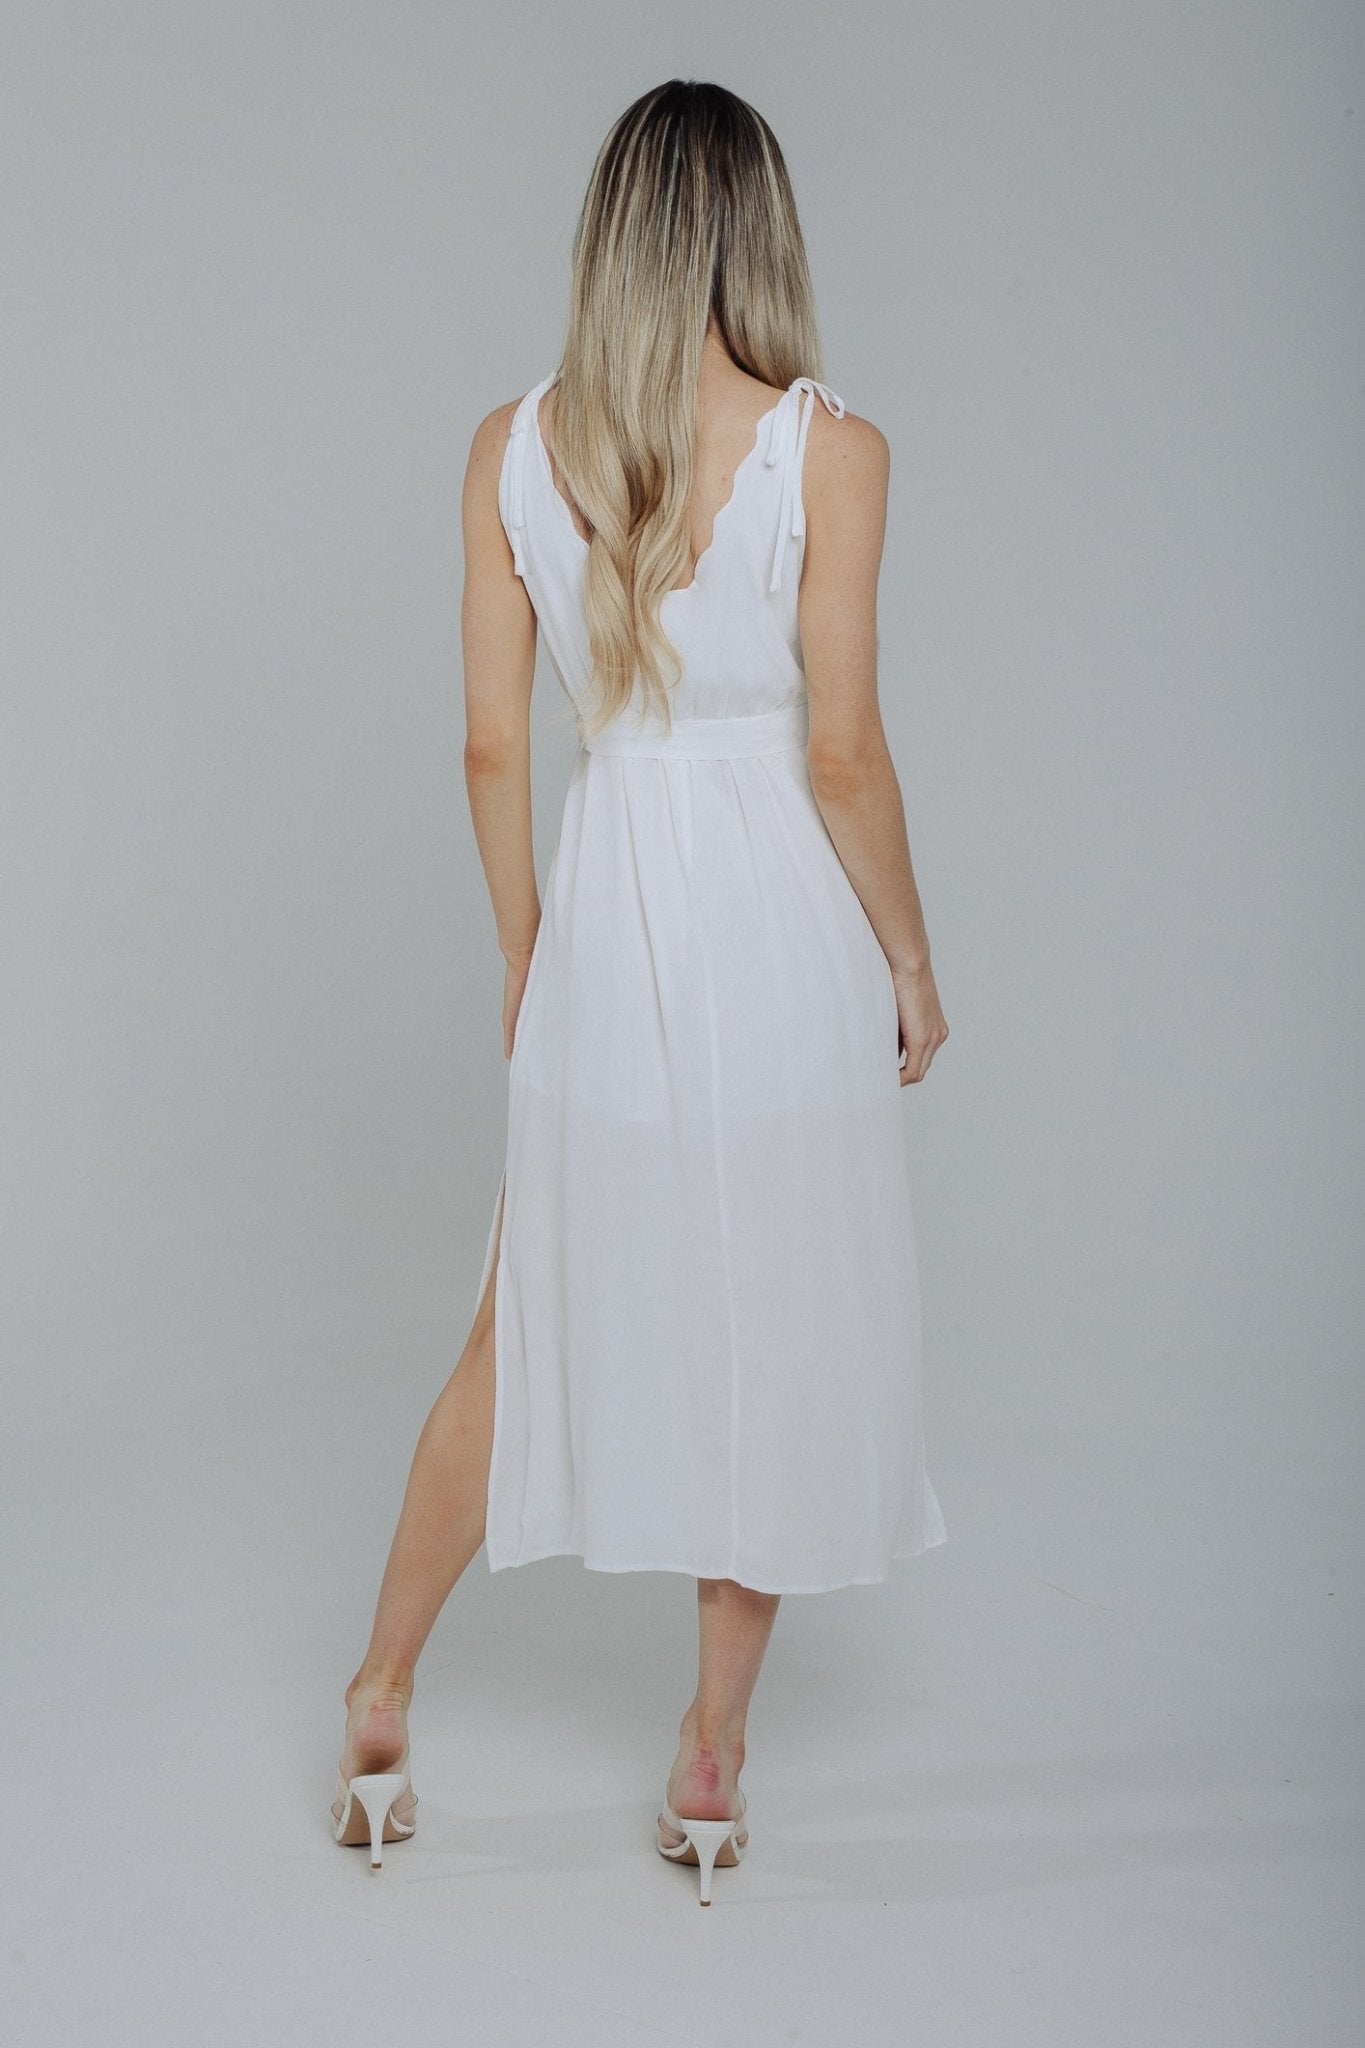 Jane Tie Shoulder Detail Dress In White - The Walk in Wardrobe